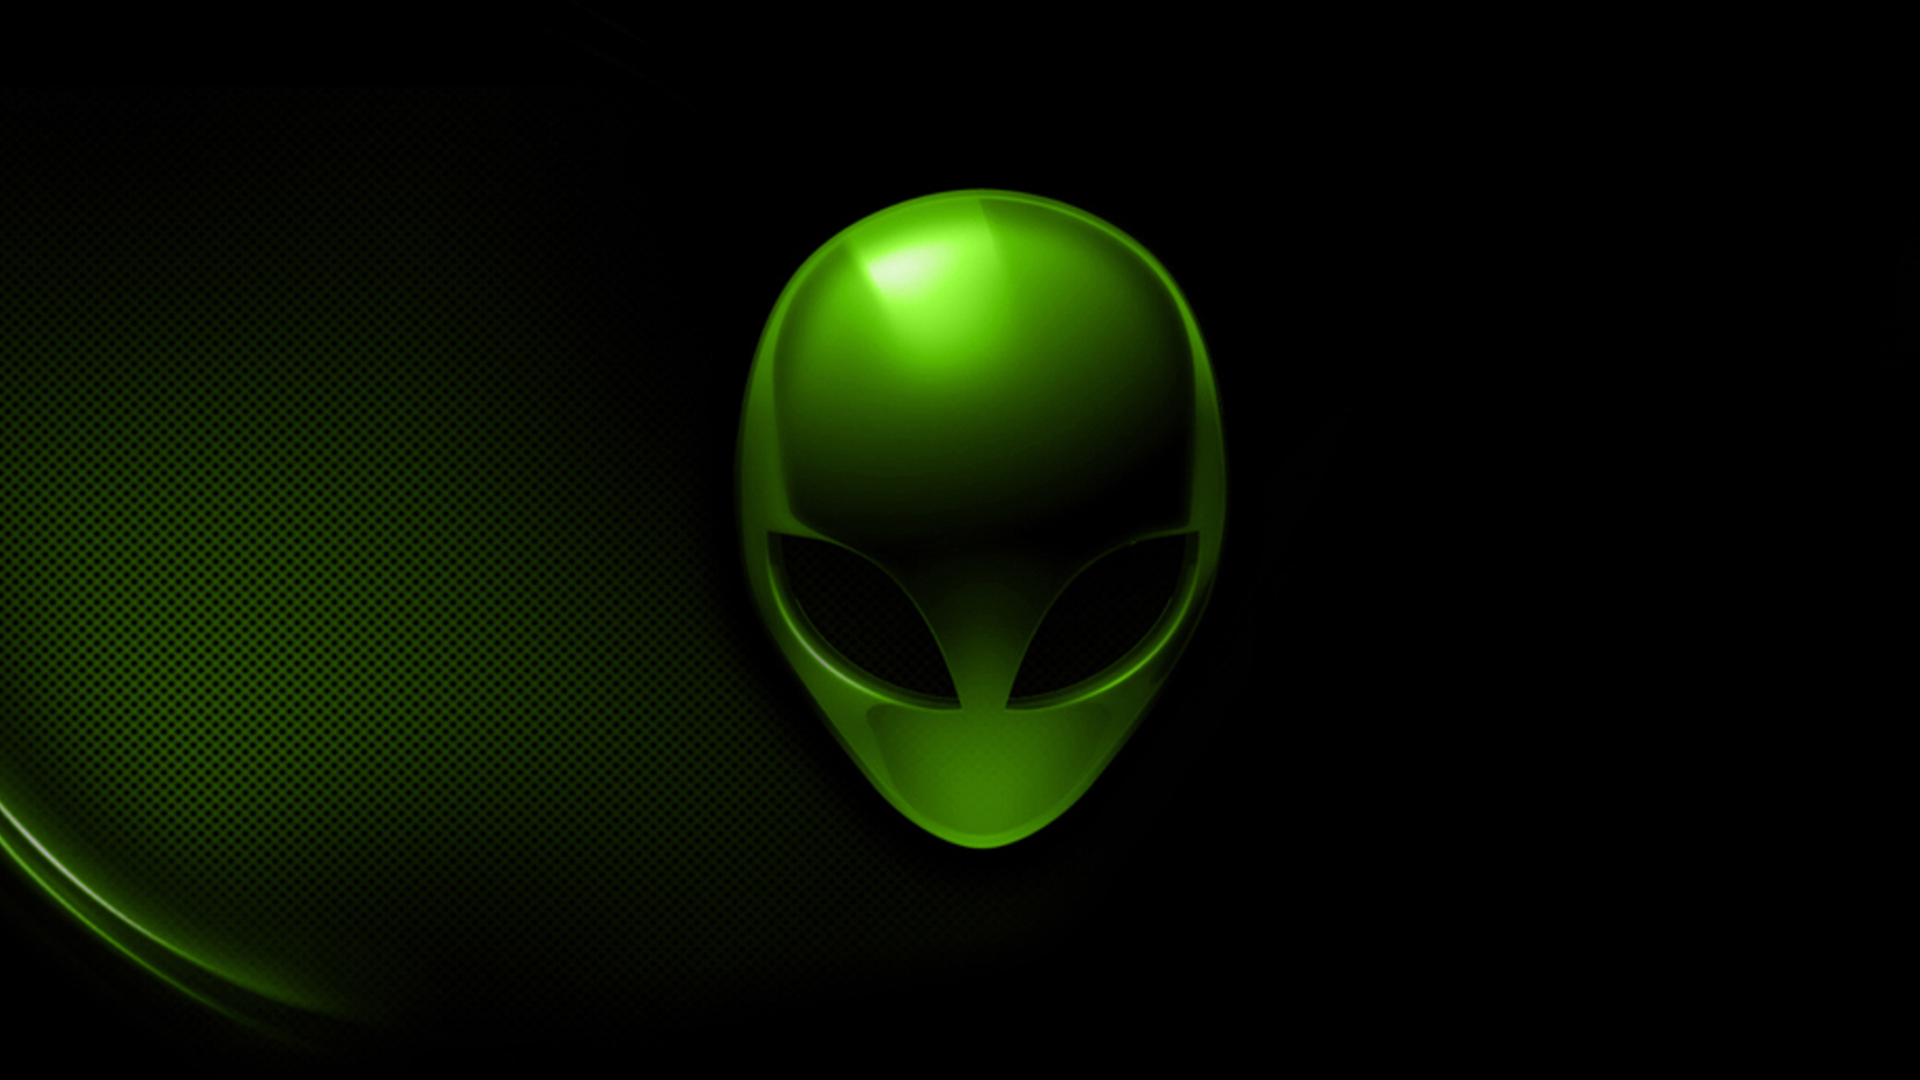 alienware dark green logo hd 1920x1080 1080p wallpaper compatible for